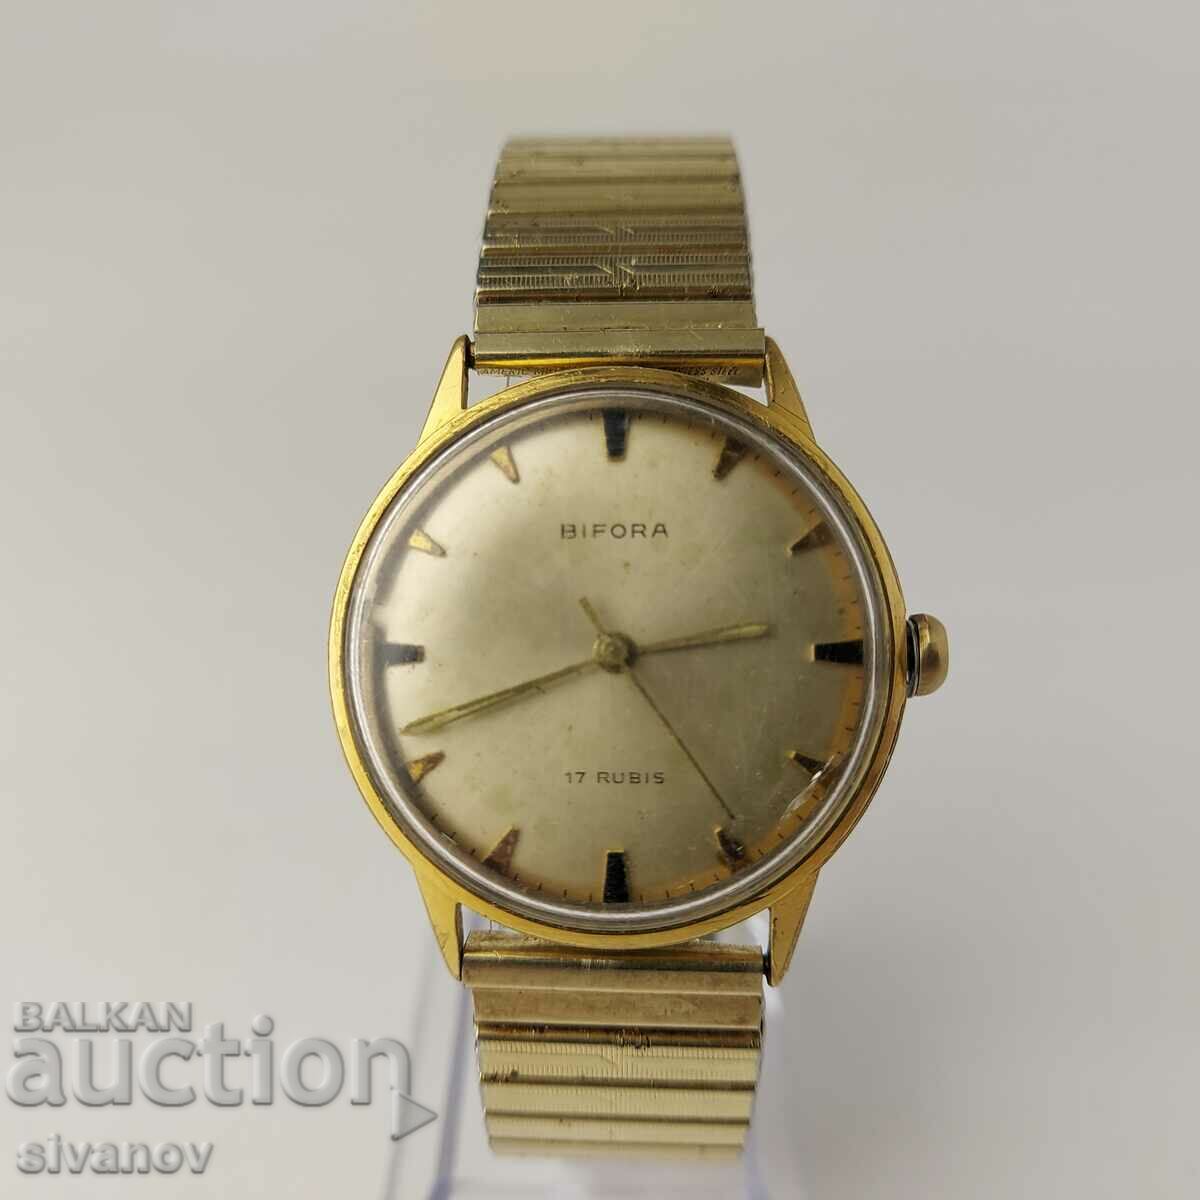 BIFORA 17 Rubis Gold Plated Working Men's Wrist Watch #5454